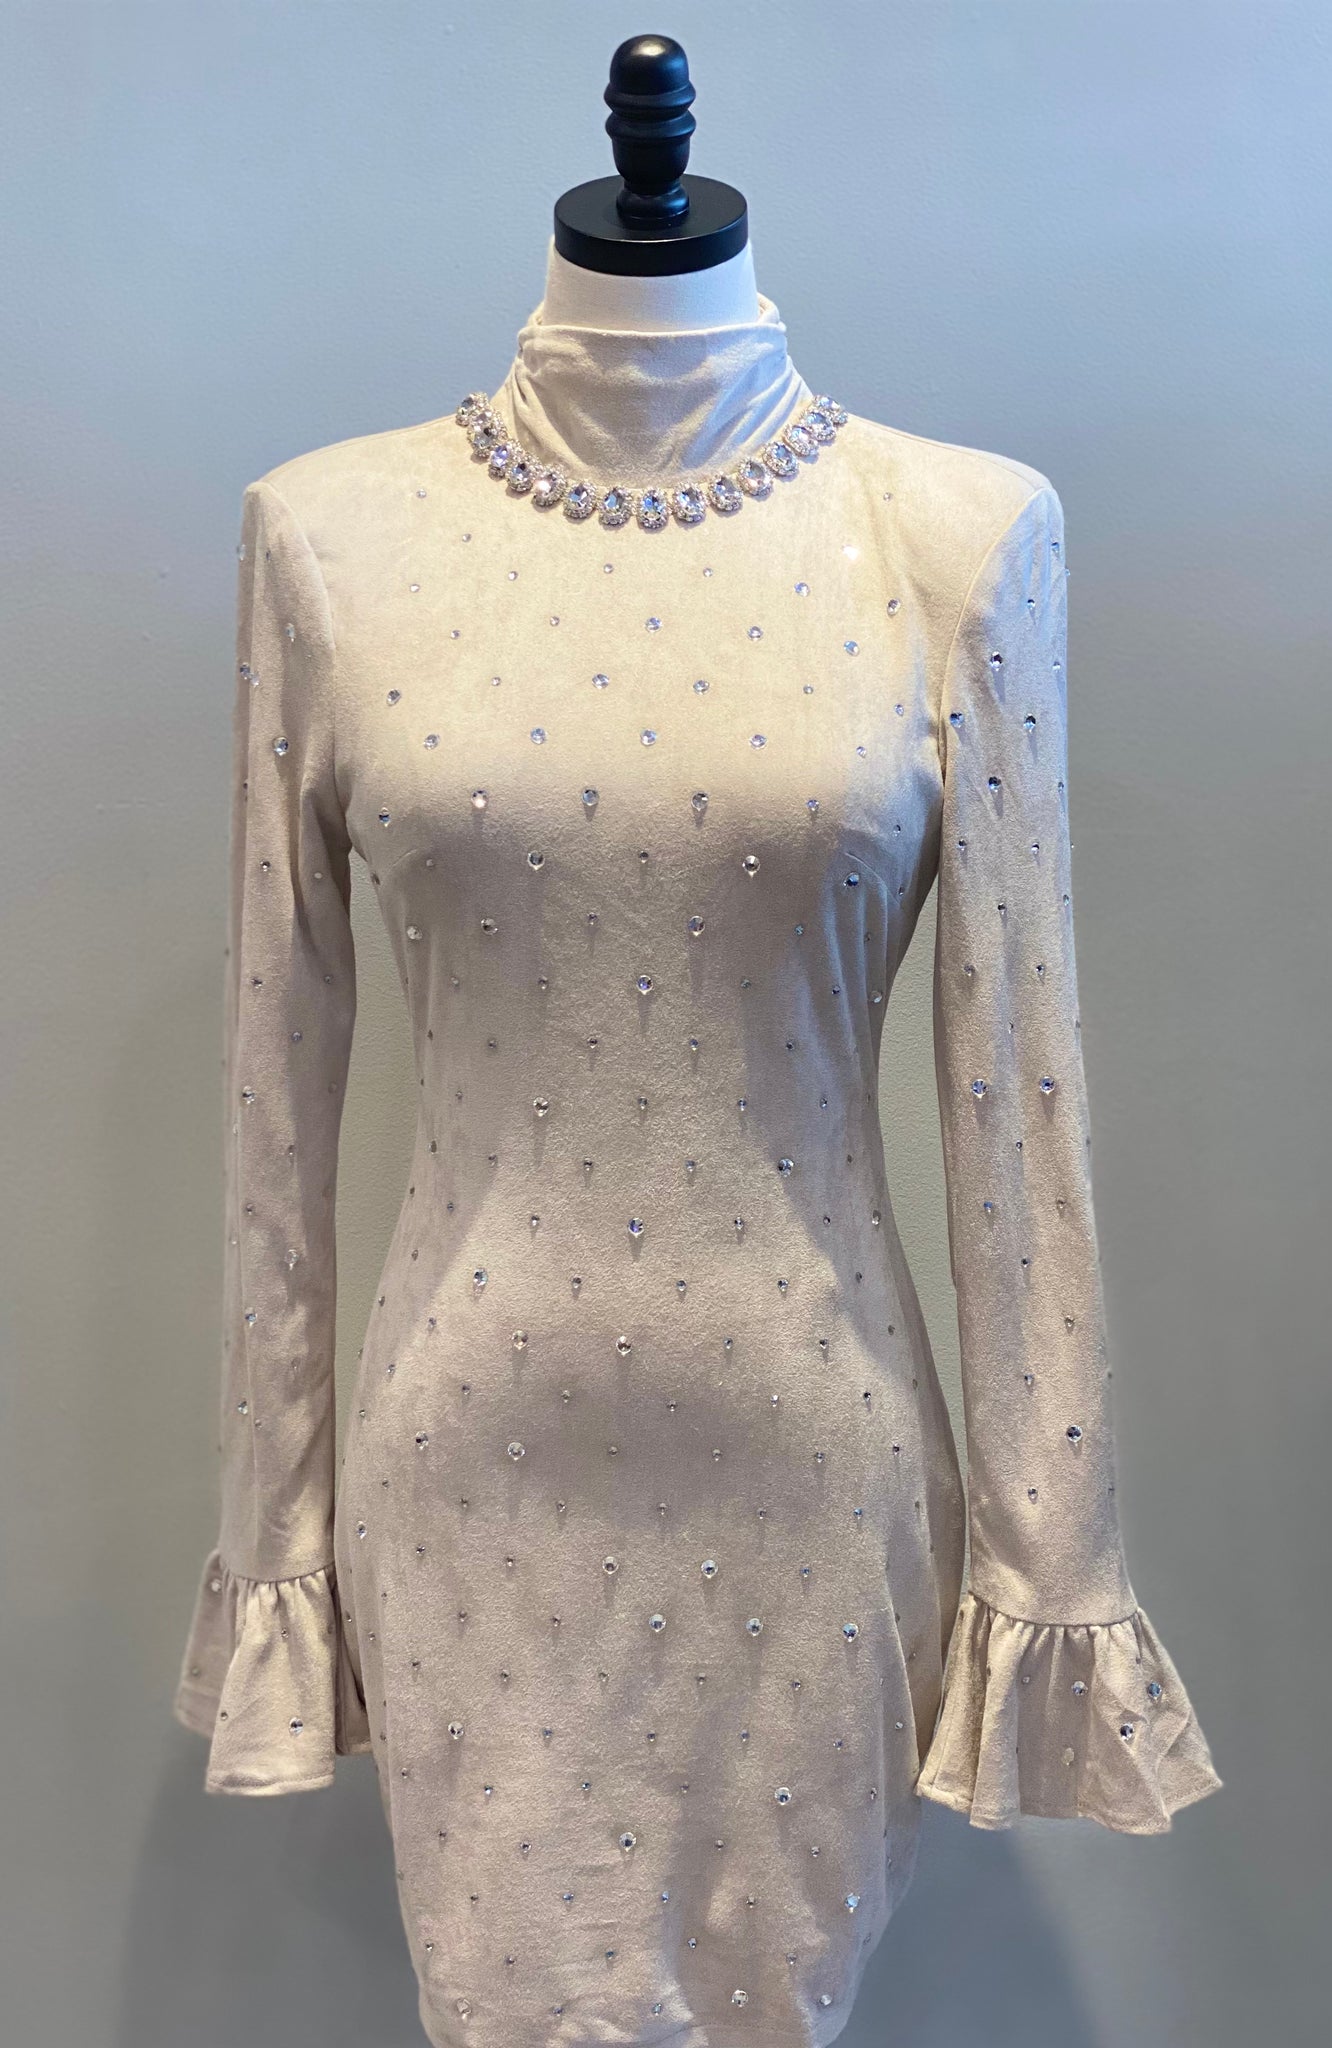 Rhinestone Detailed Dress